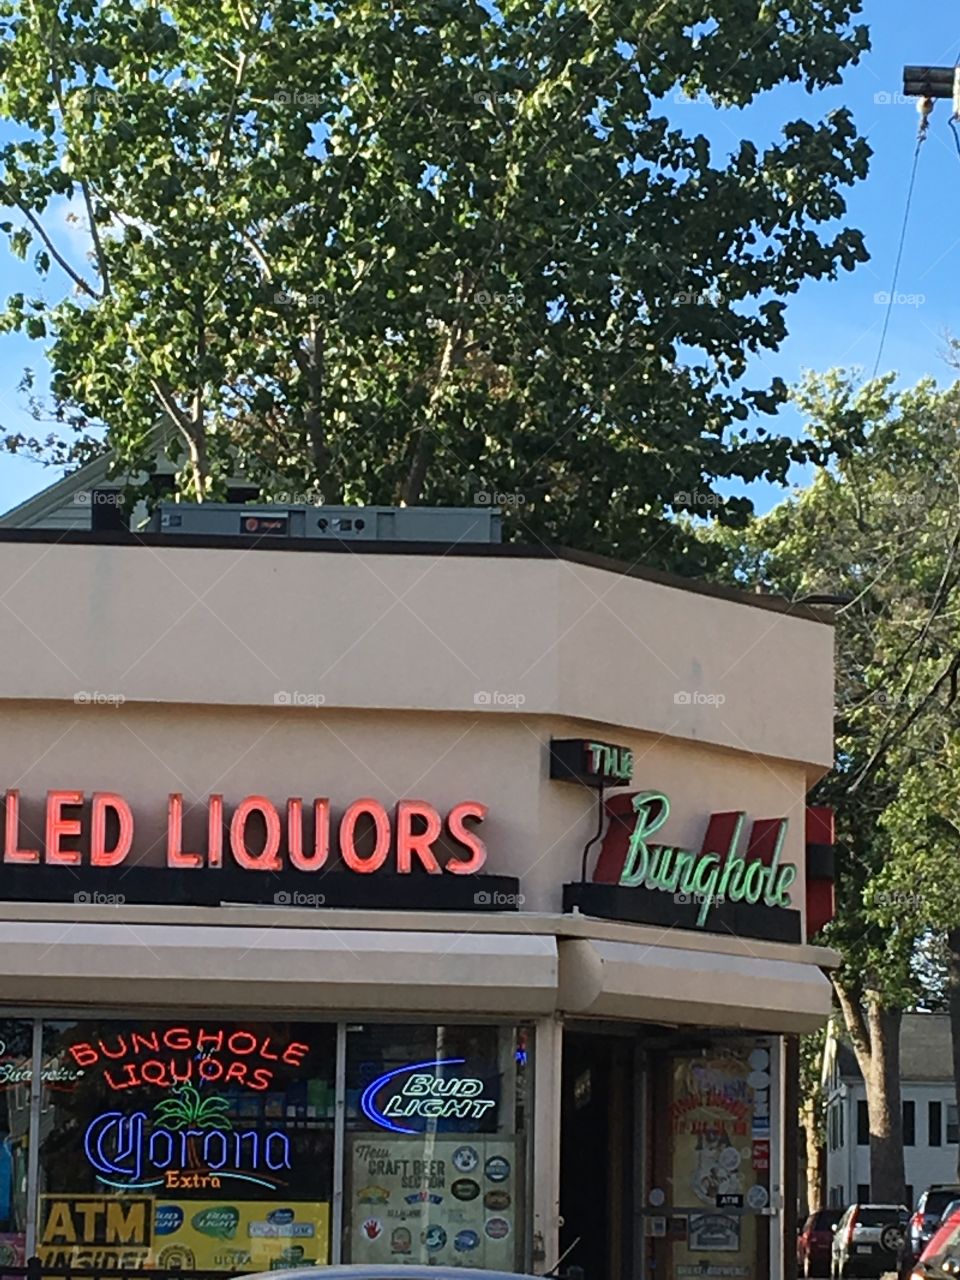 Bunghole liquors